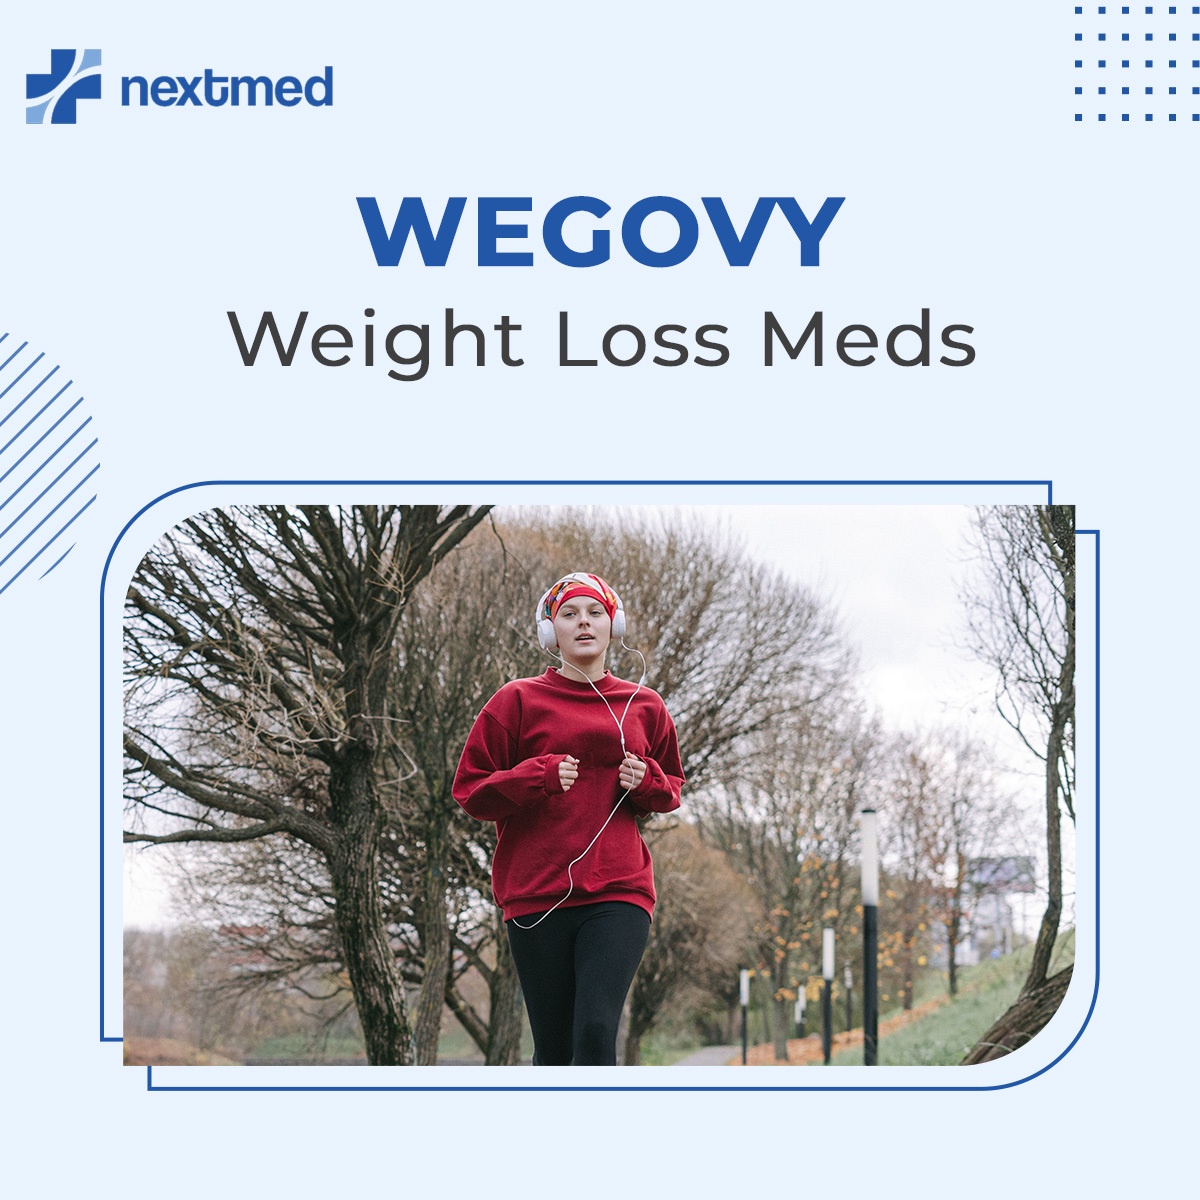 Wegovy Weight Loss Meds: Understanding the Risks and Benefits